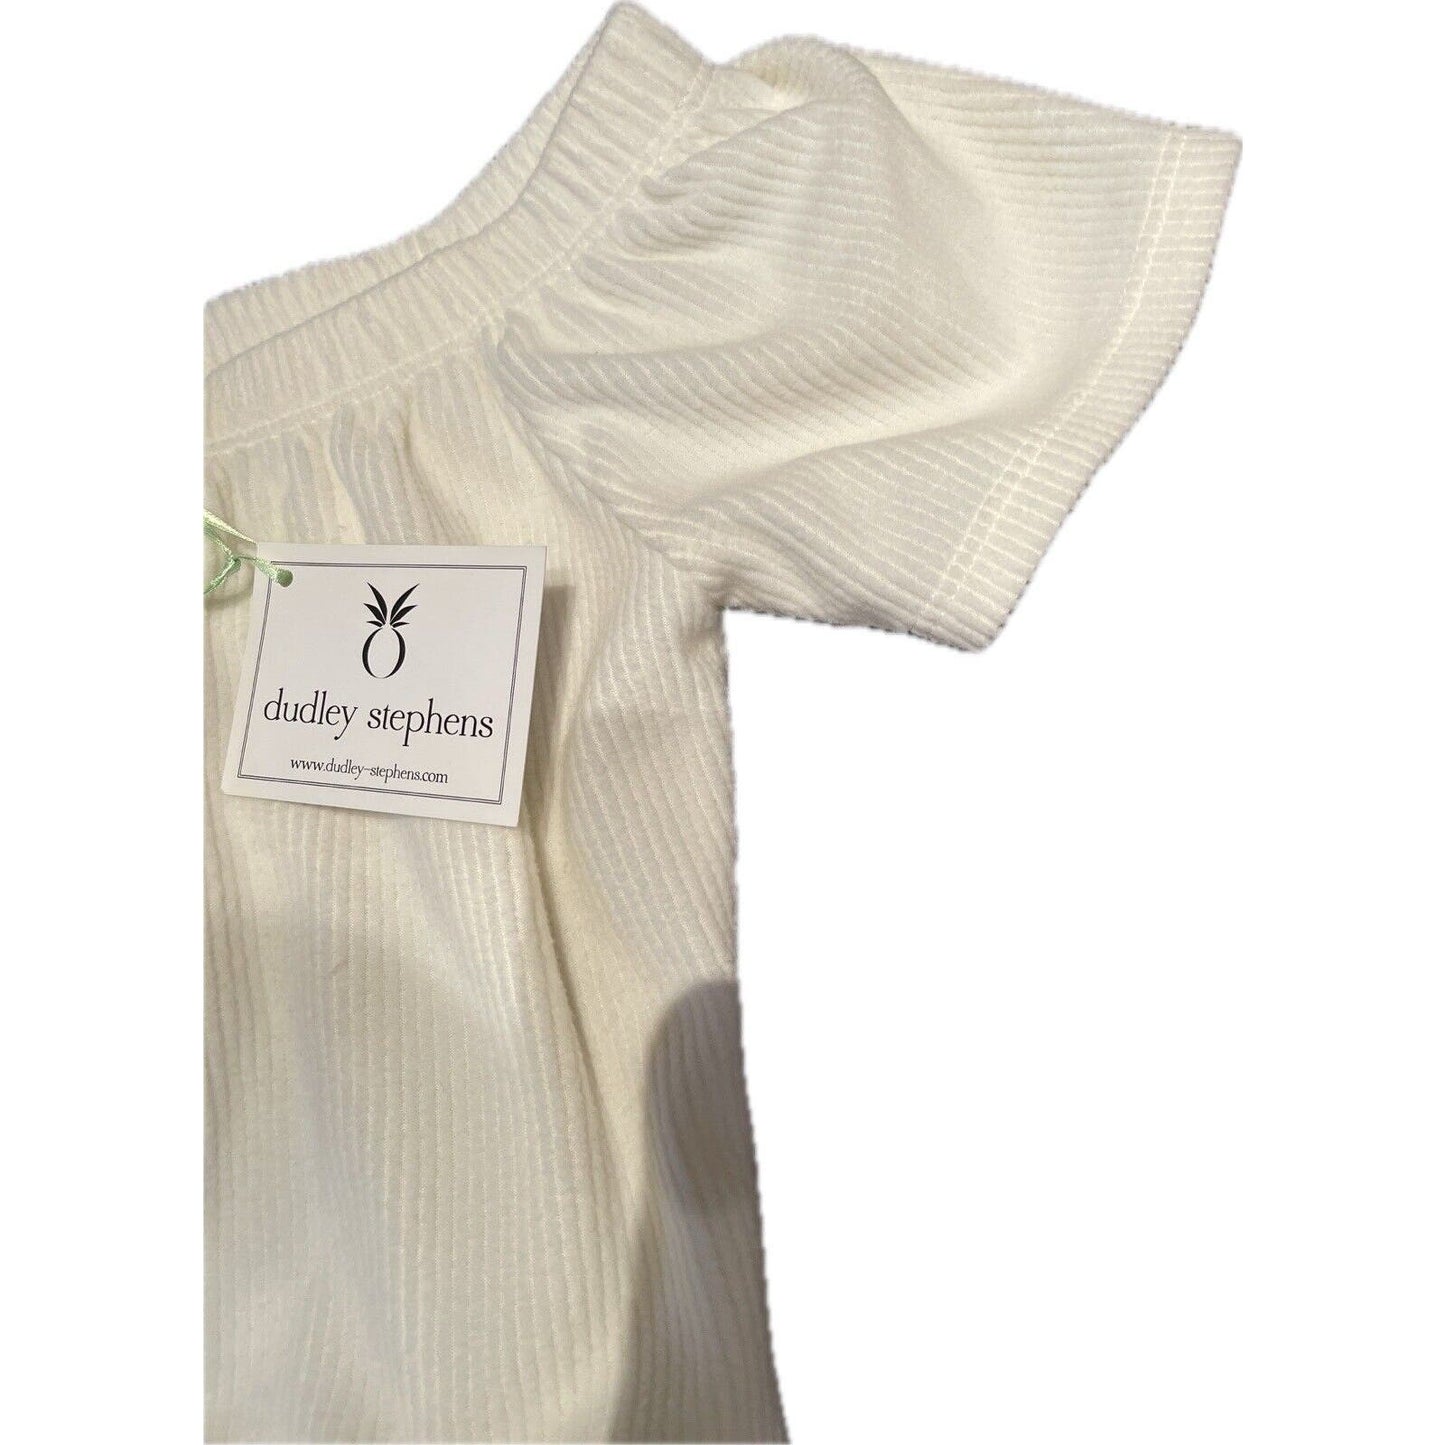 NWT Dudley Stephens Sidney Summer Dress Ribbed Fleece White Size Medium (6-8)